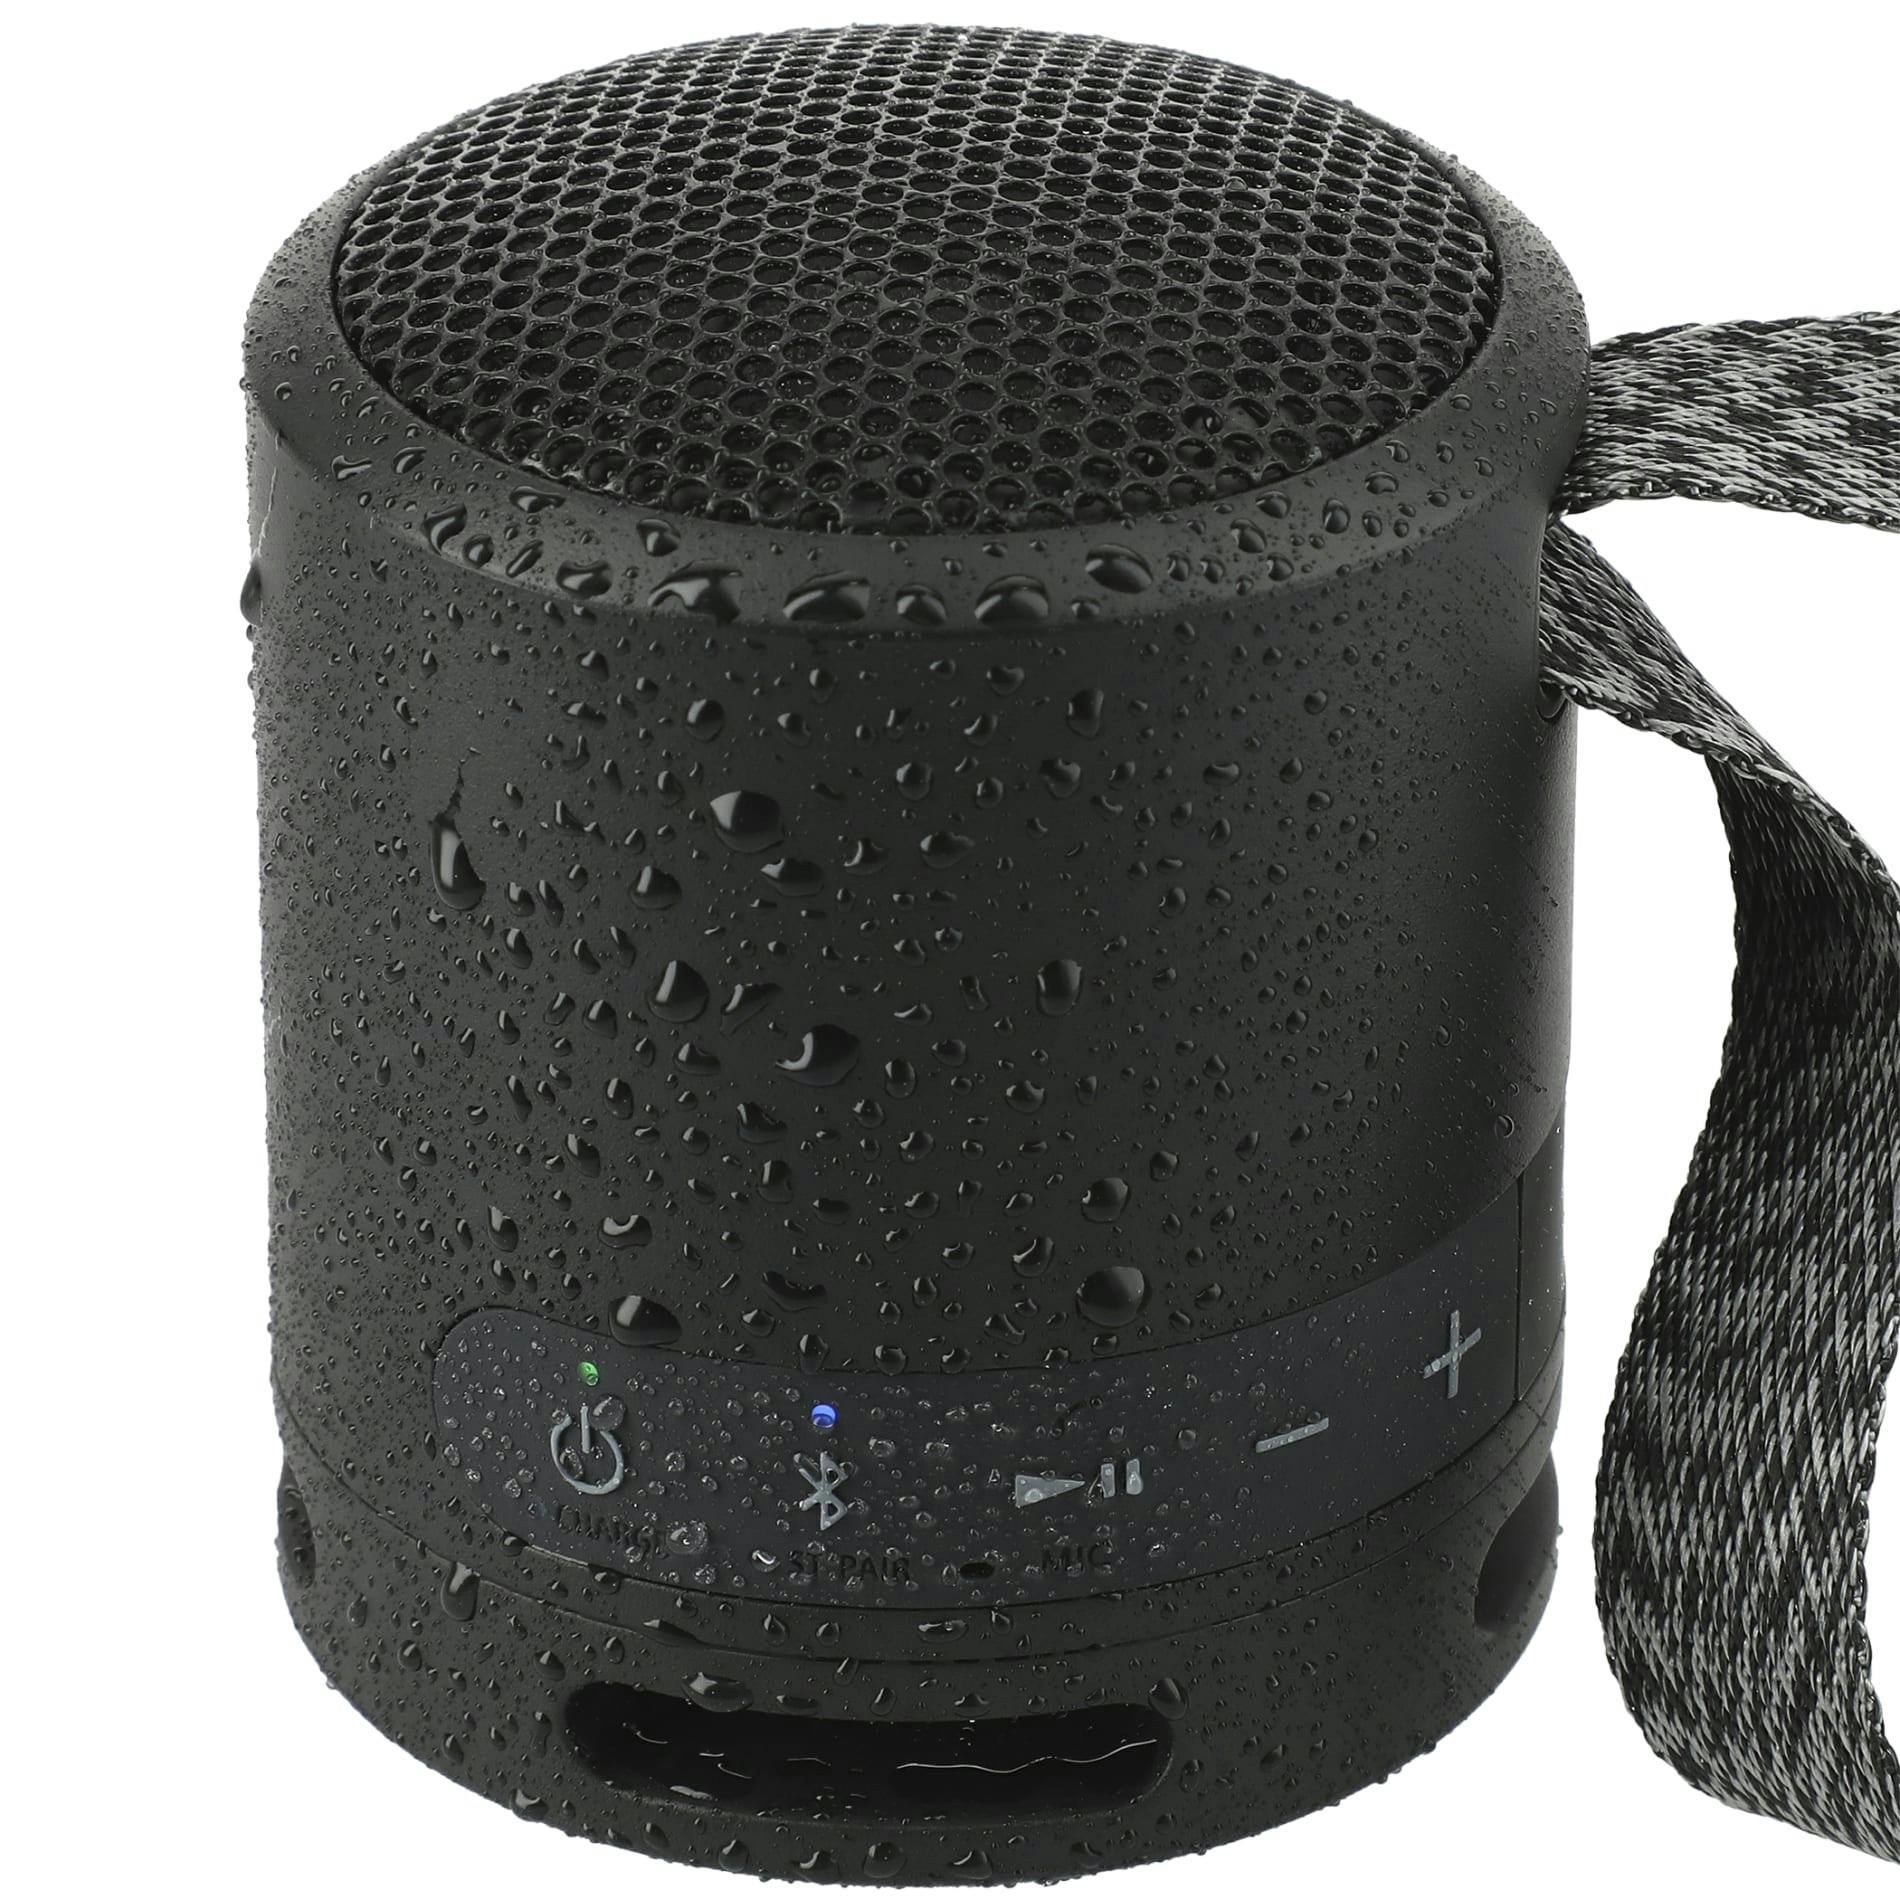 Sony SRS-XB13 Bluetooth Speaker - additional Image 5